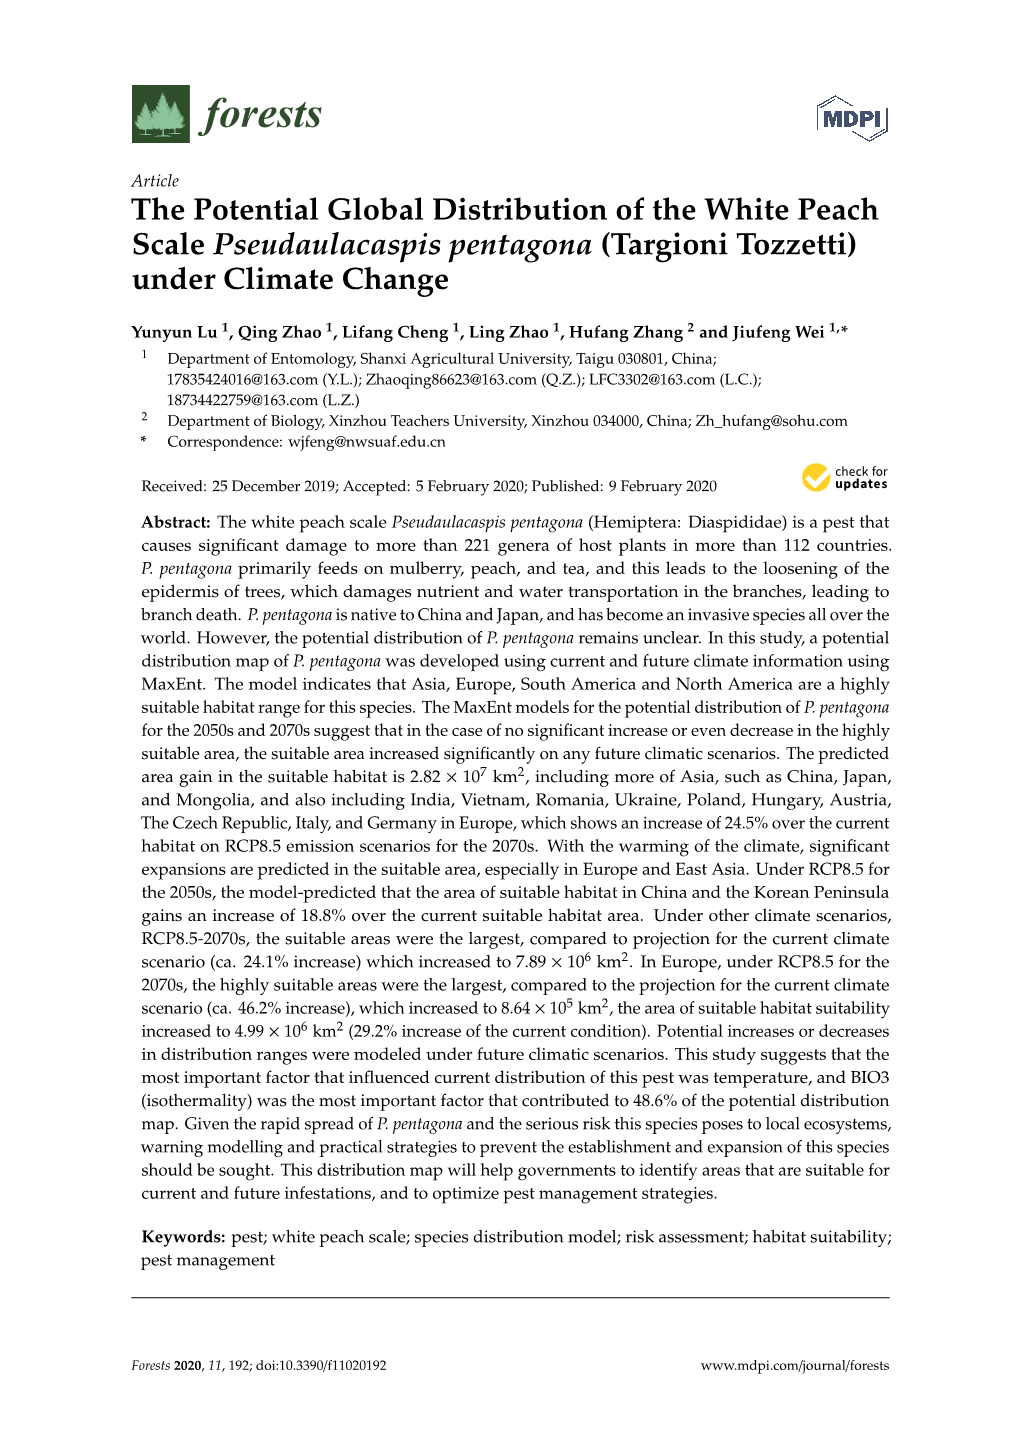 The Potential Global Distribution of the White Peach Scale Pseudaulacaspis Pentagona (Targioni Tozzetti) Under Climate Change